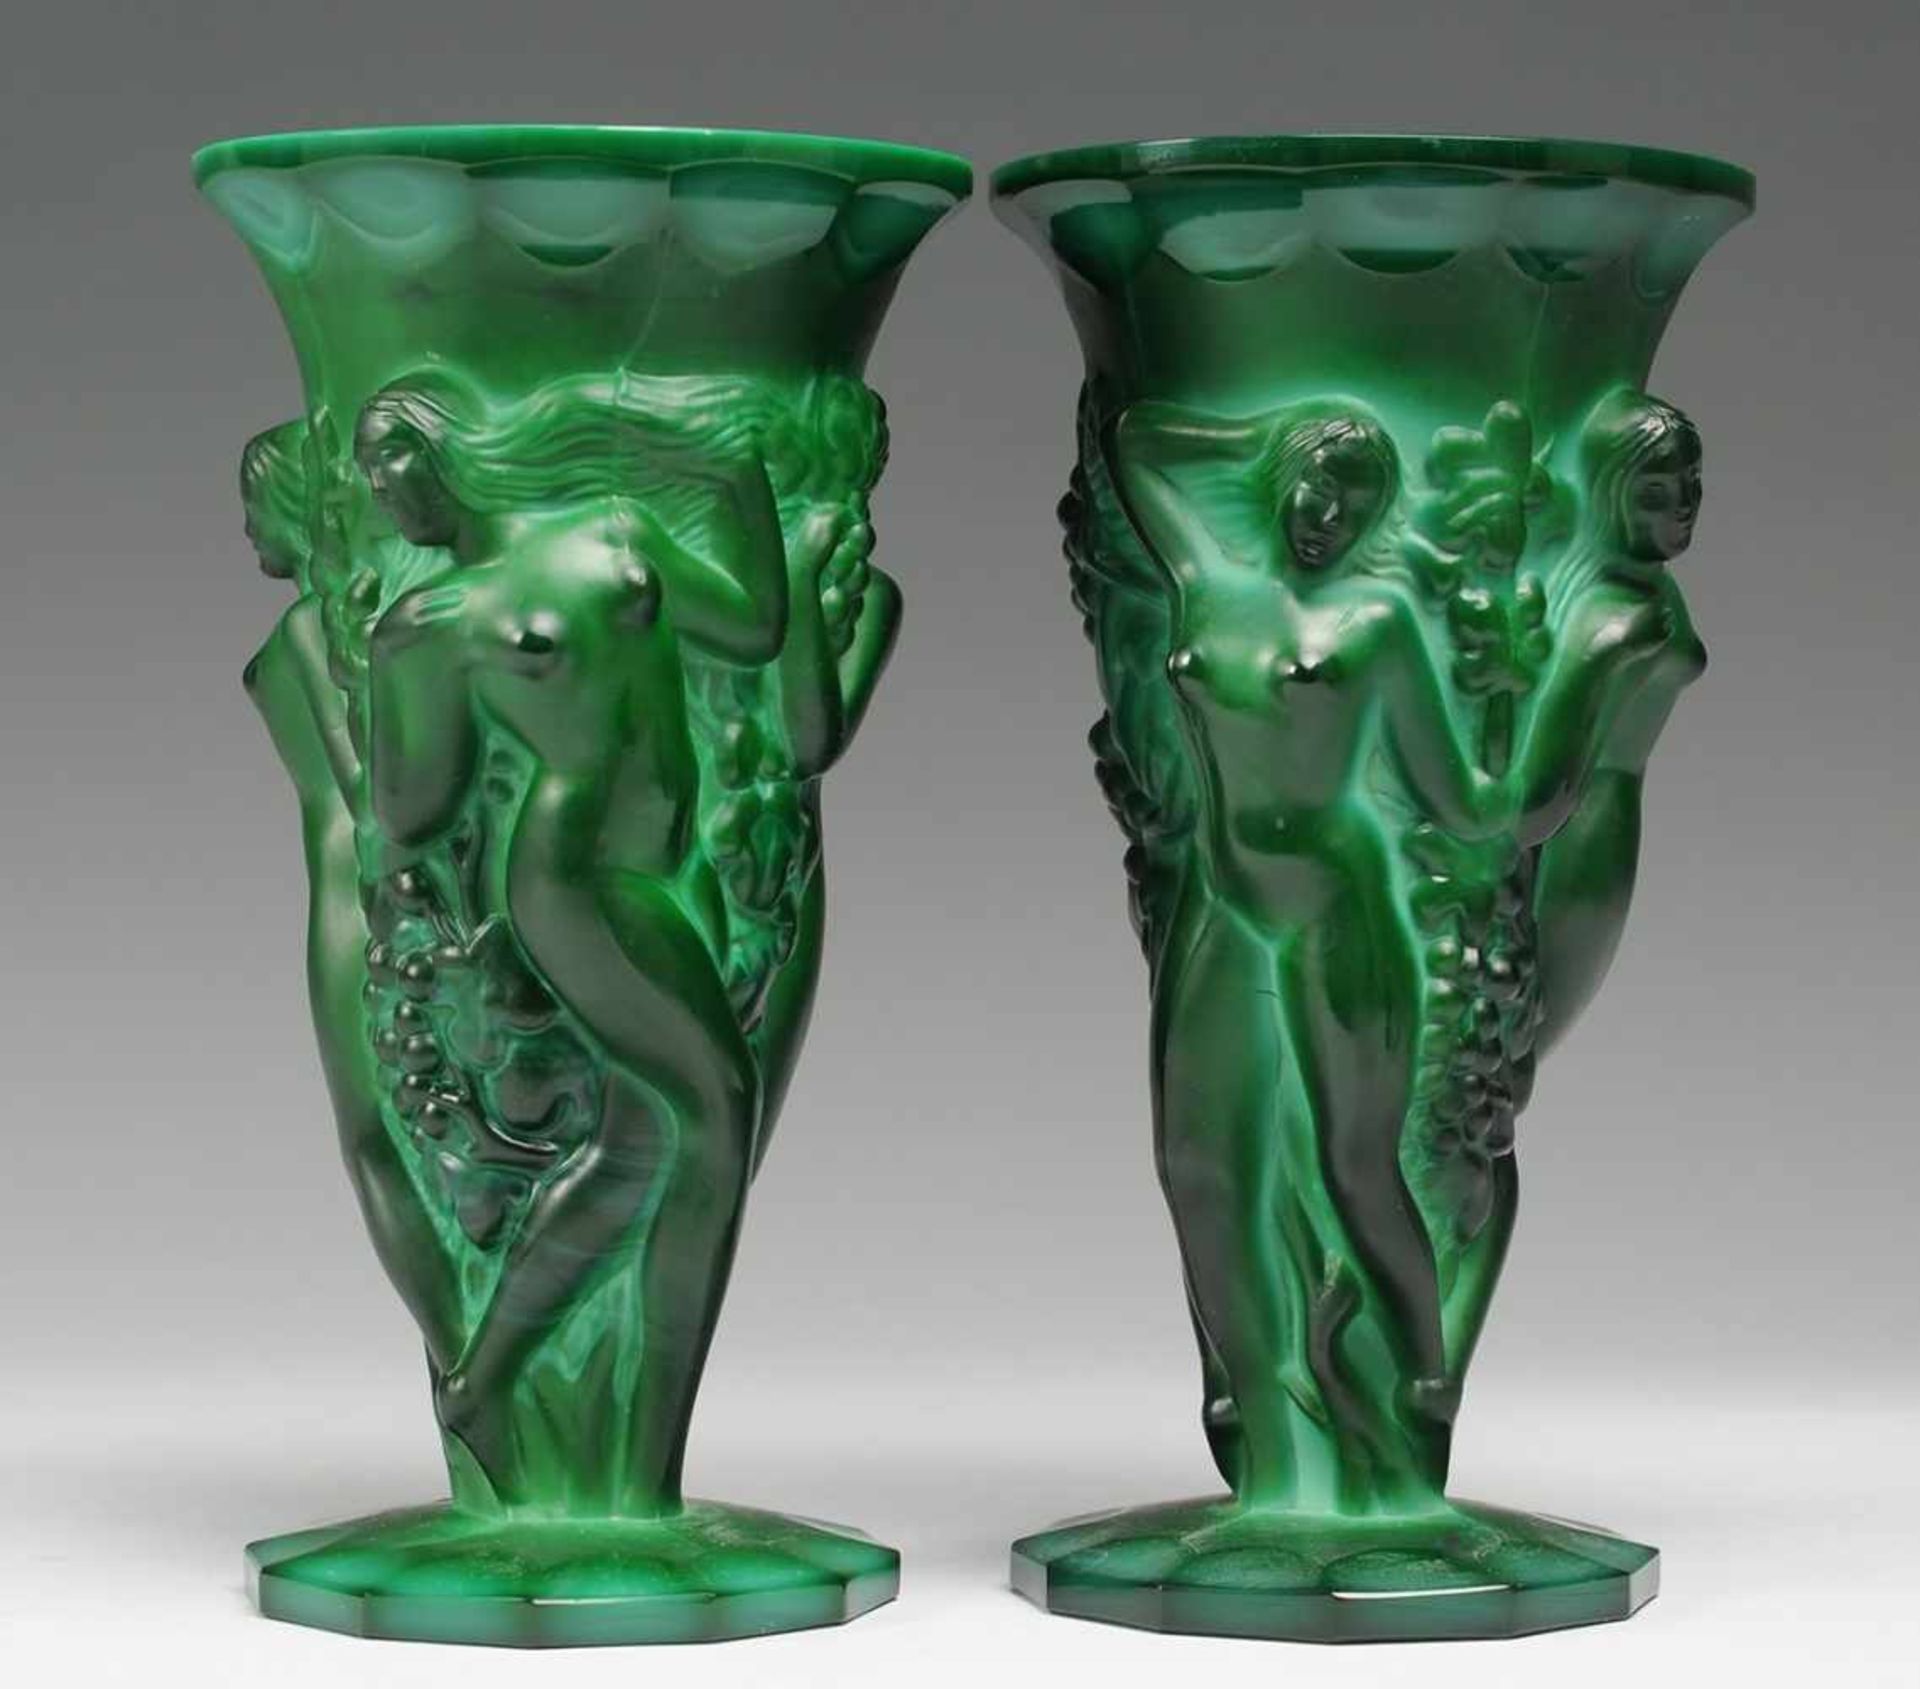 Paar Vasen "Ingrid"Opakes jadegrünes Pressglas, sogen. Malachitglas, part. geschliffen. Auf